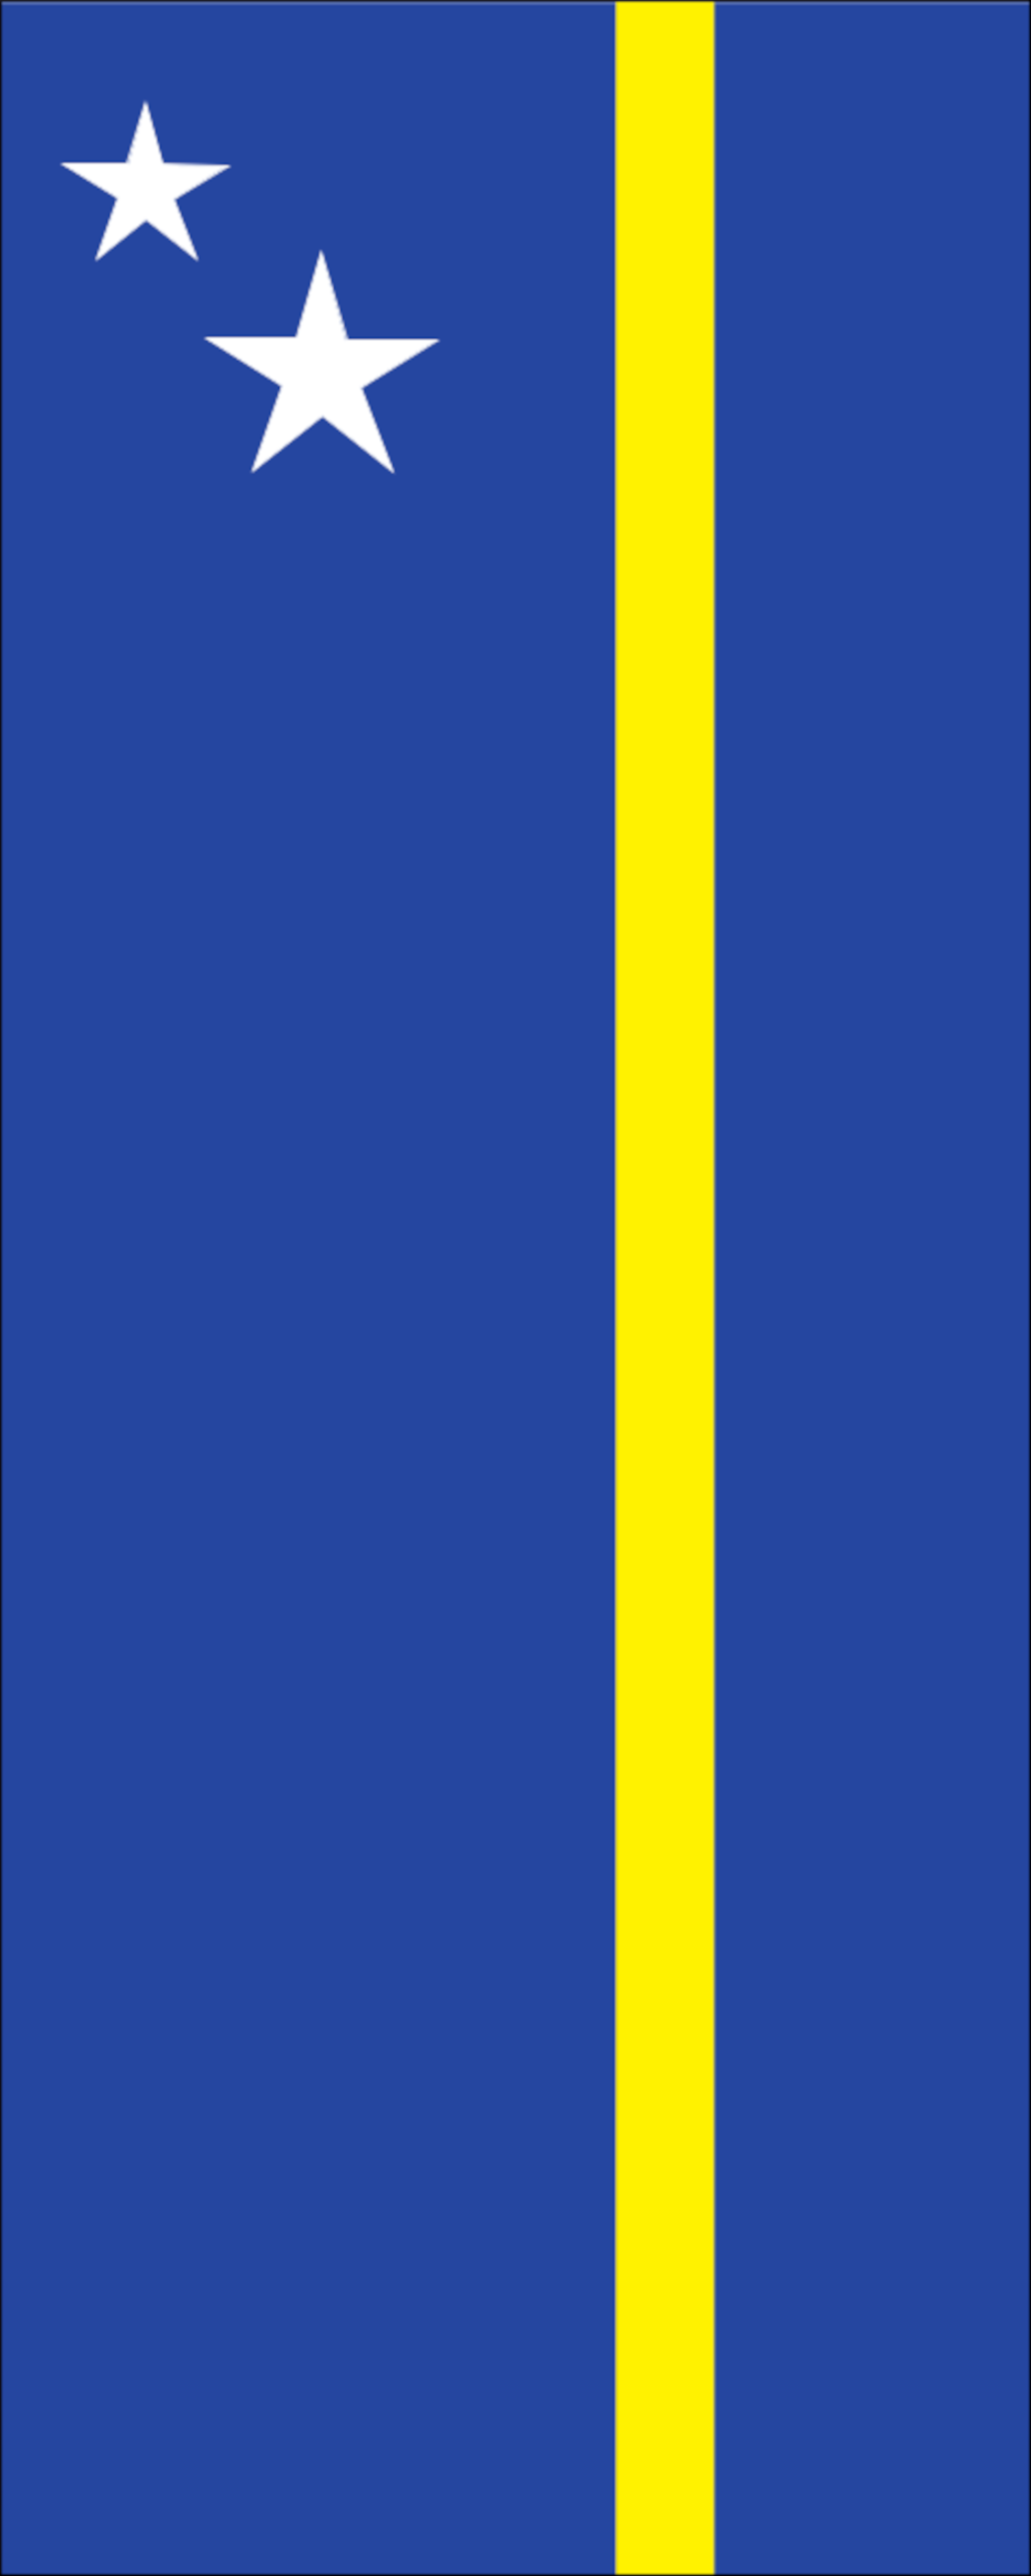 Flagge Curacao